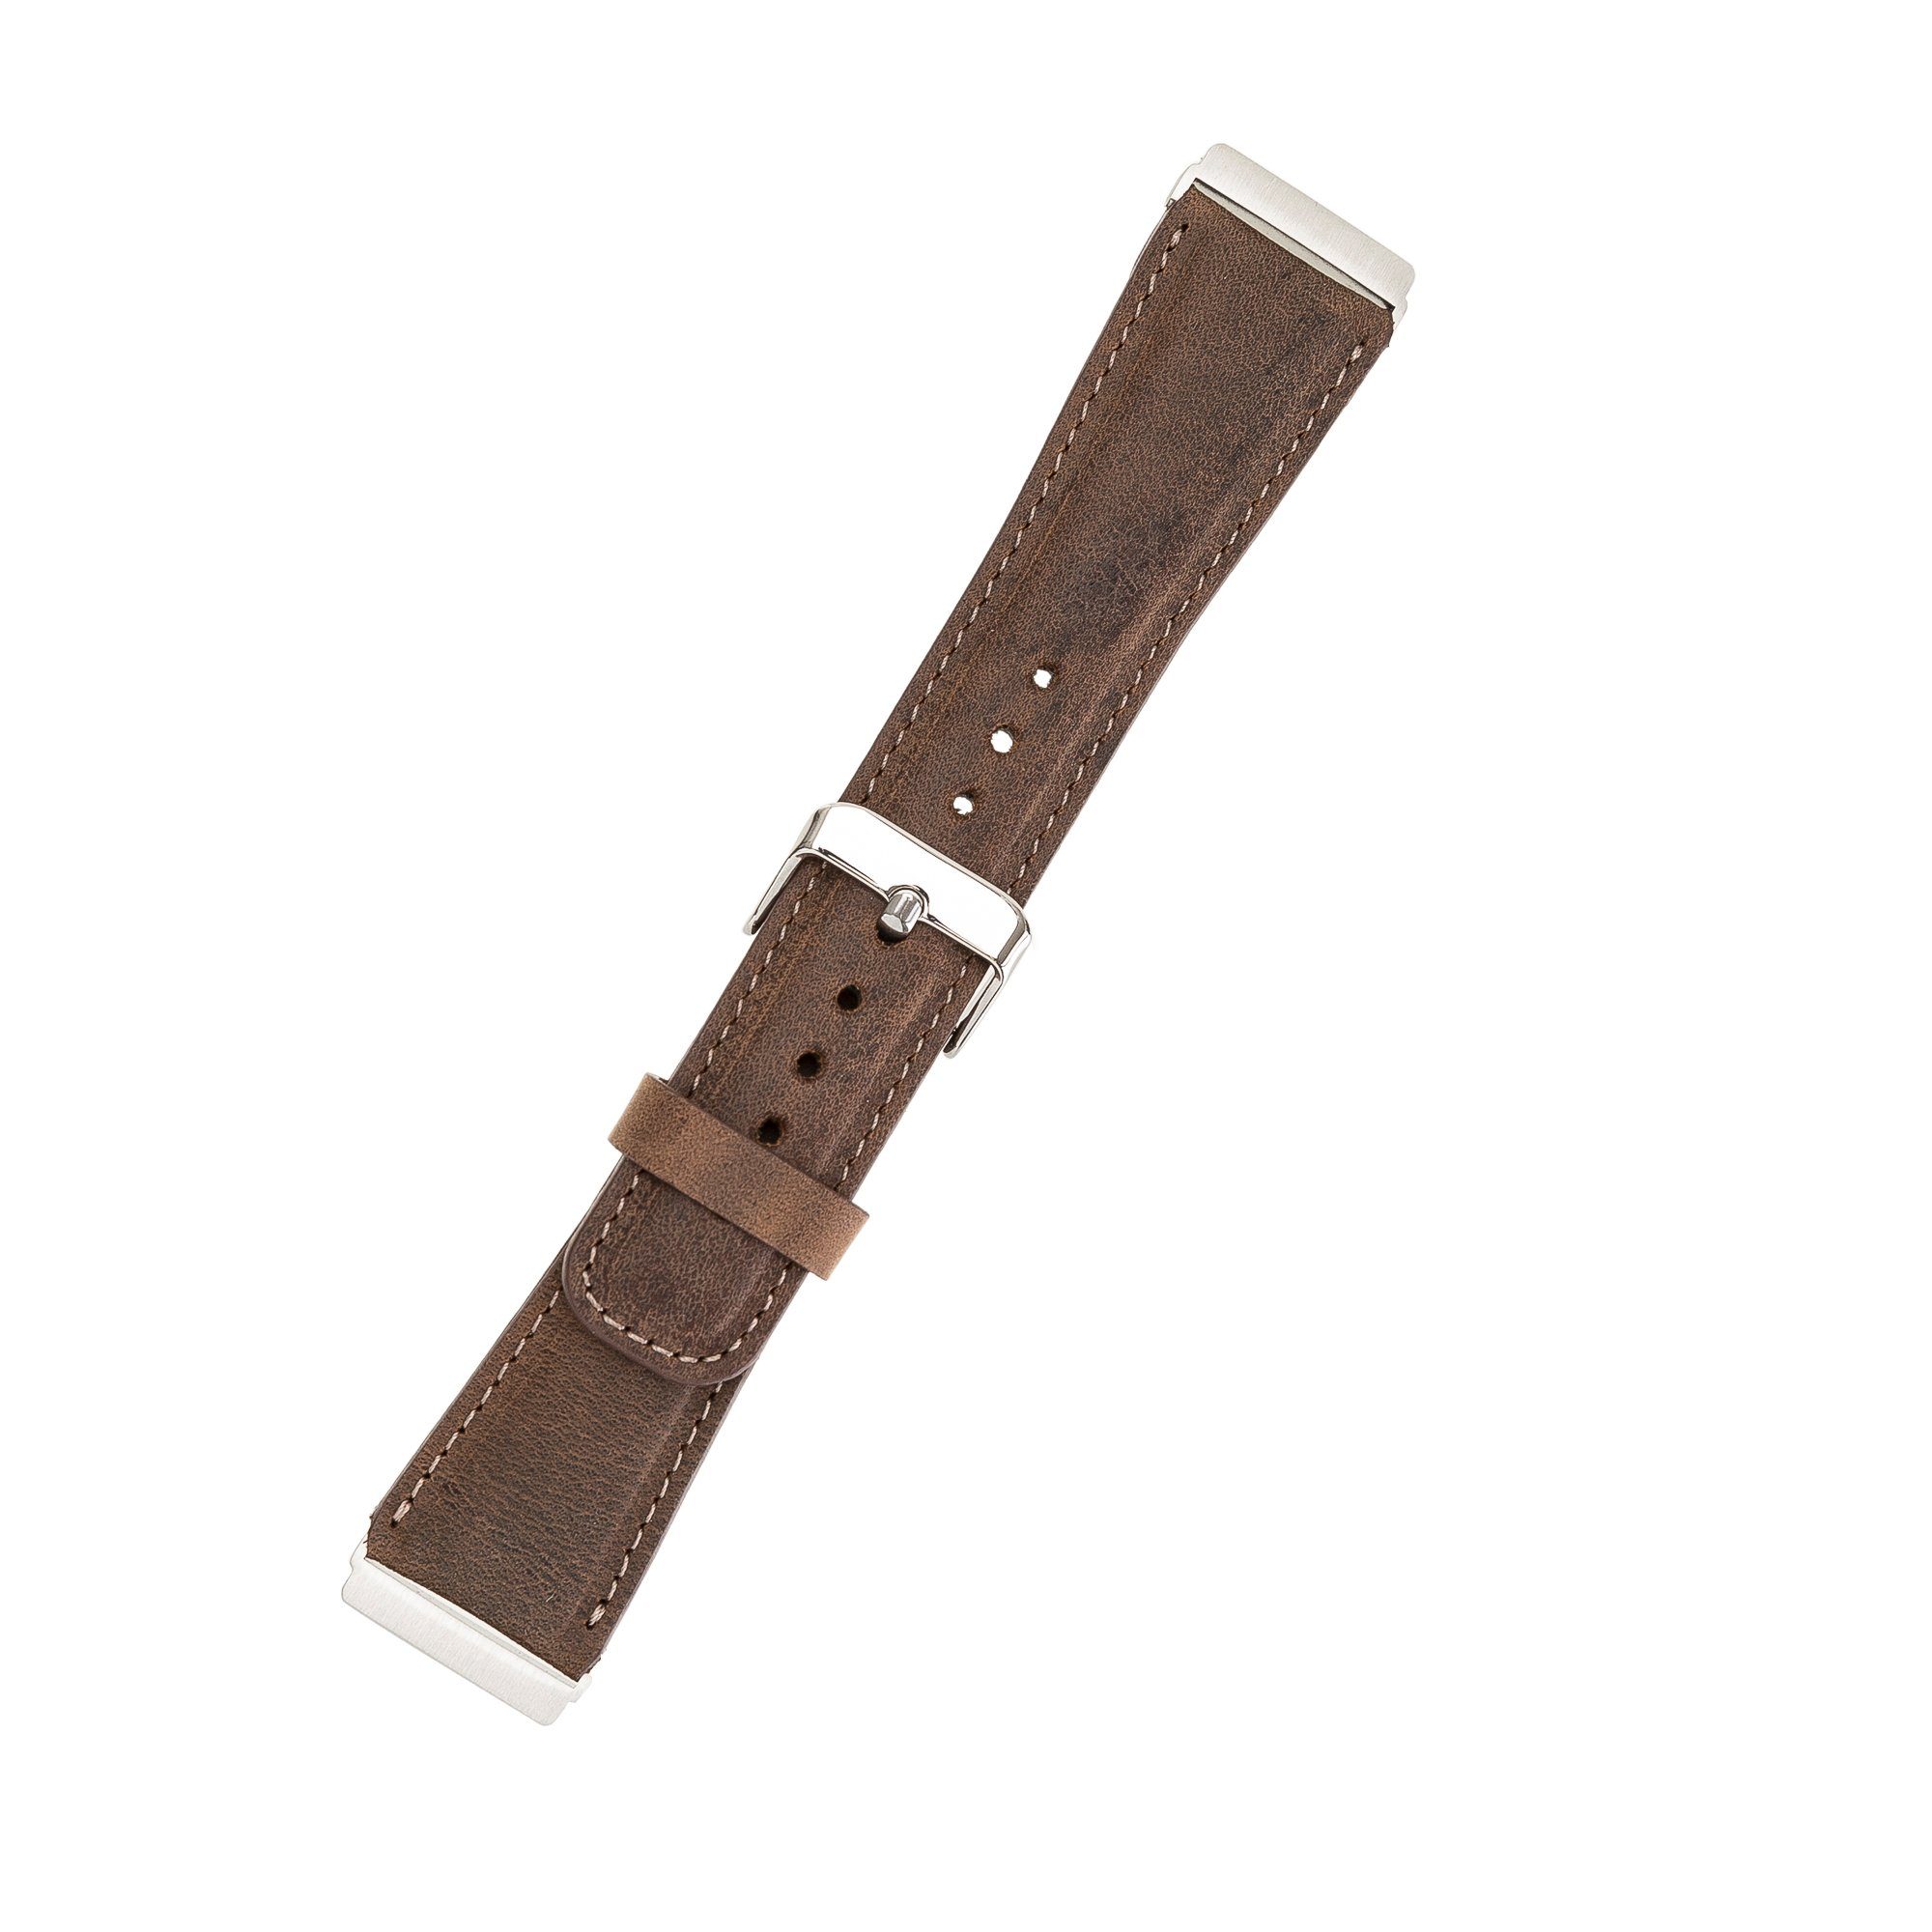 4 2 Matt Sense Armband 3 Renna Smartwatch-Armband Leder & Echtes / Braun Versa Ersatzarmband / Fitbit Leather